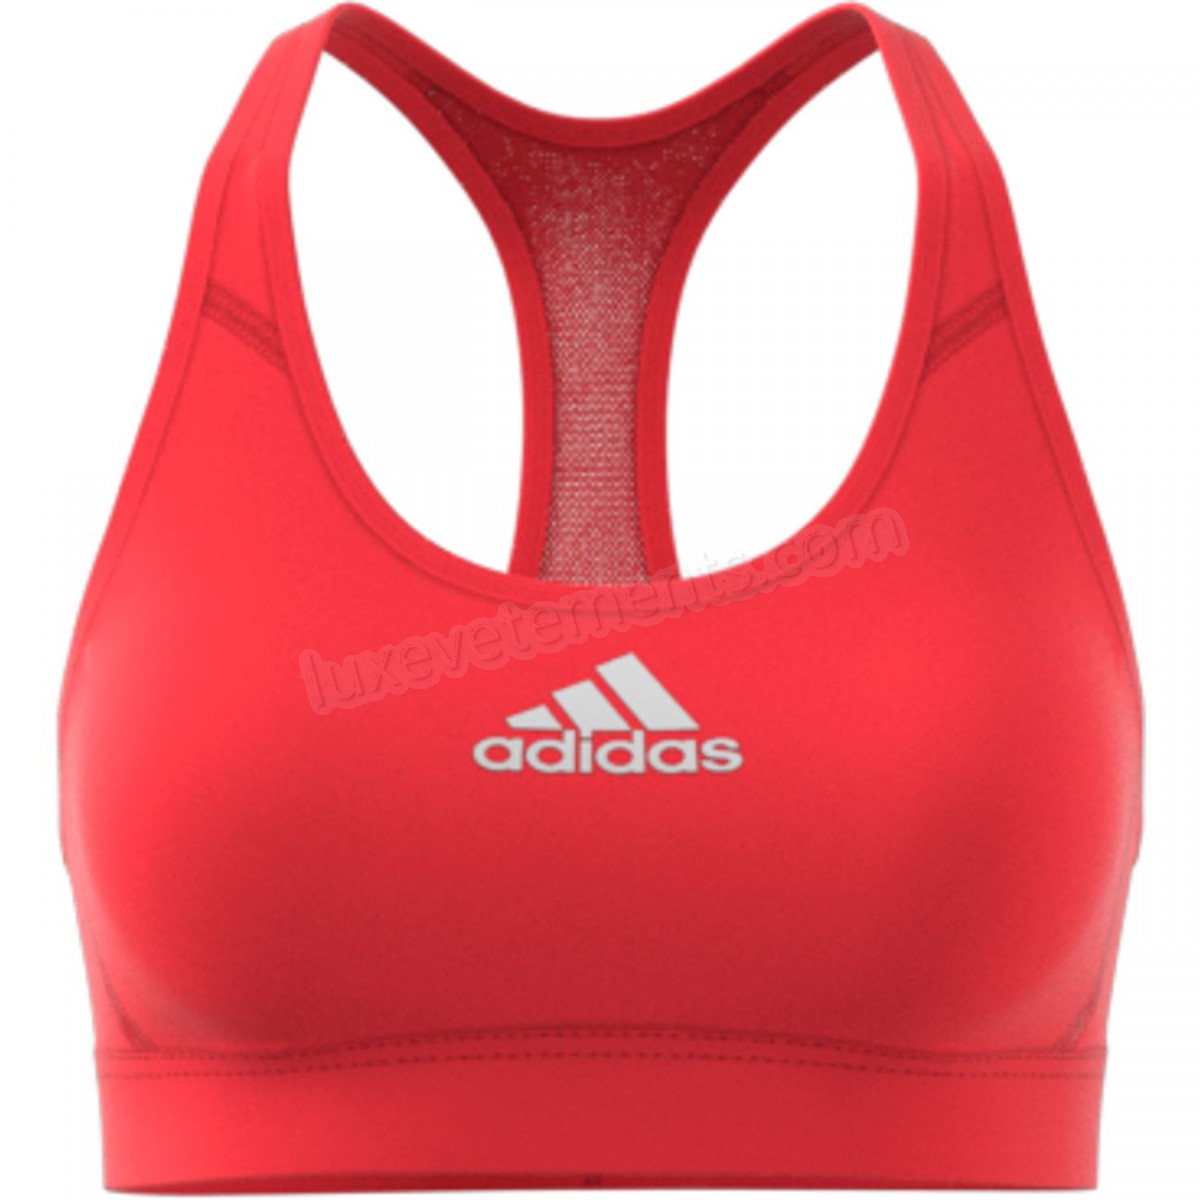 Adidas-Fitness femme ADIDAS Brassière adidas Don't Rest Alphaskin Vente en ligne - -49